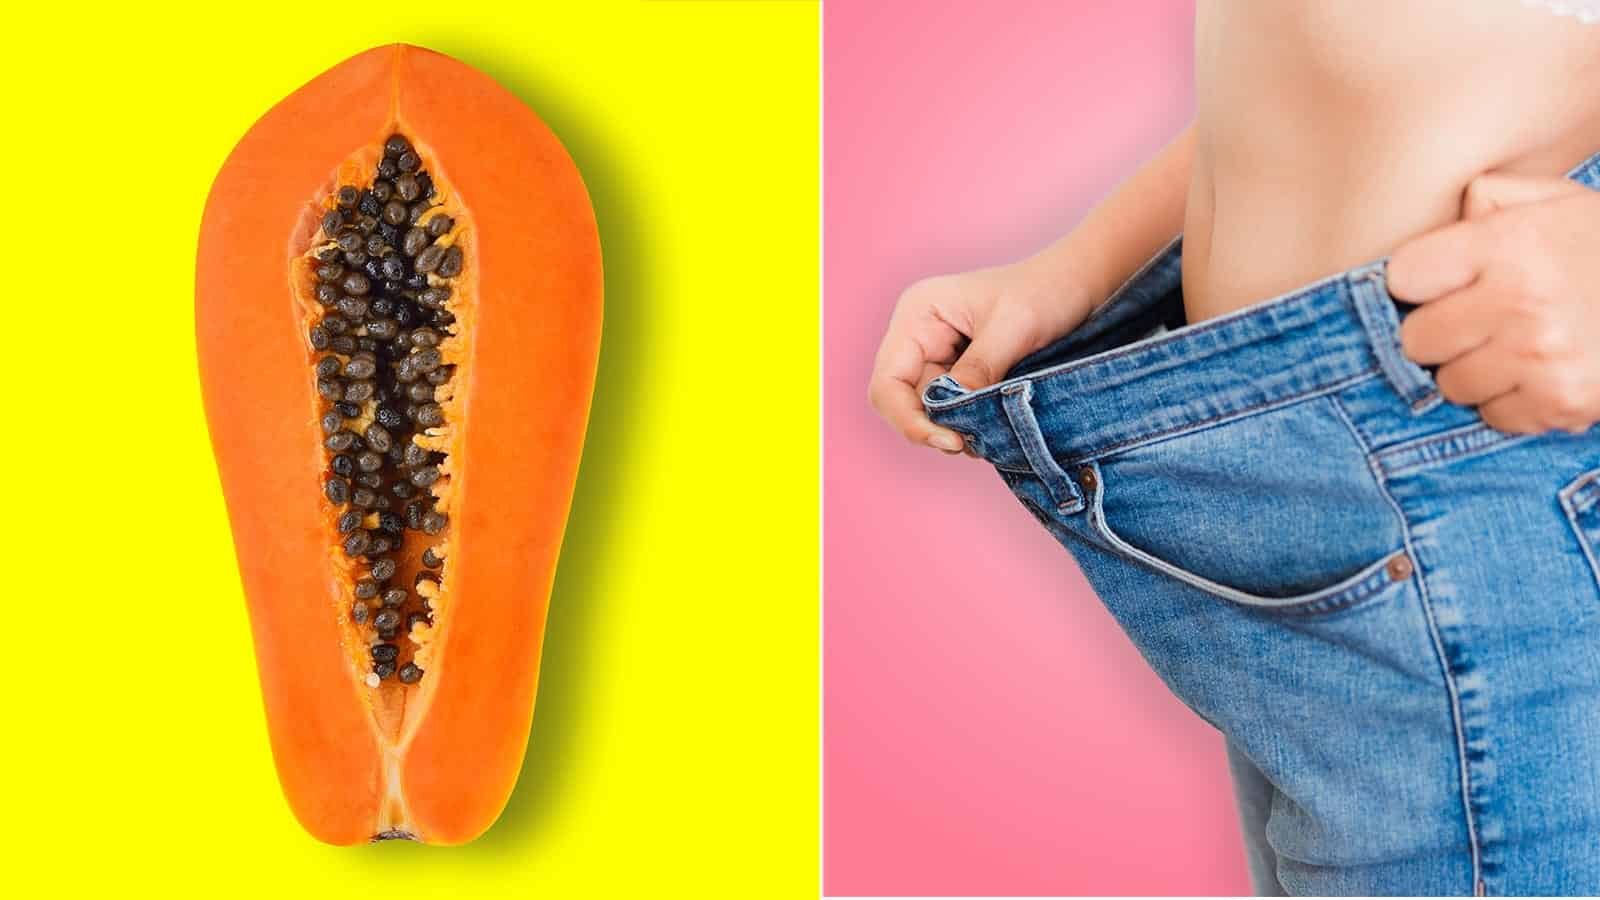 Papaya Fat Diet Plan For Weight Loss